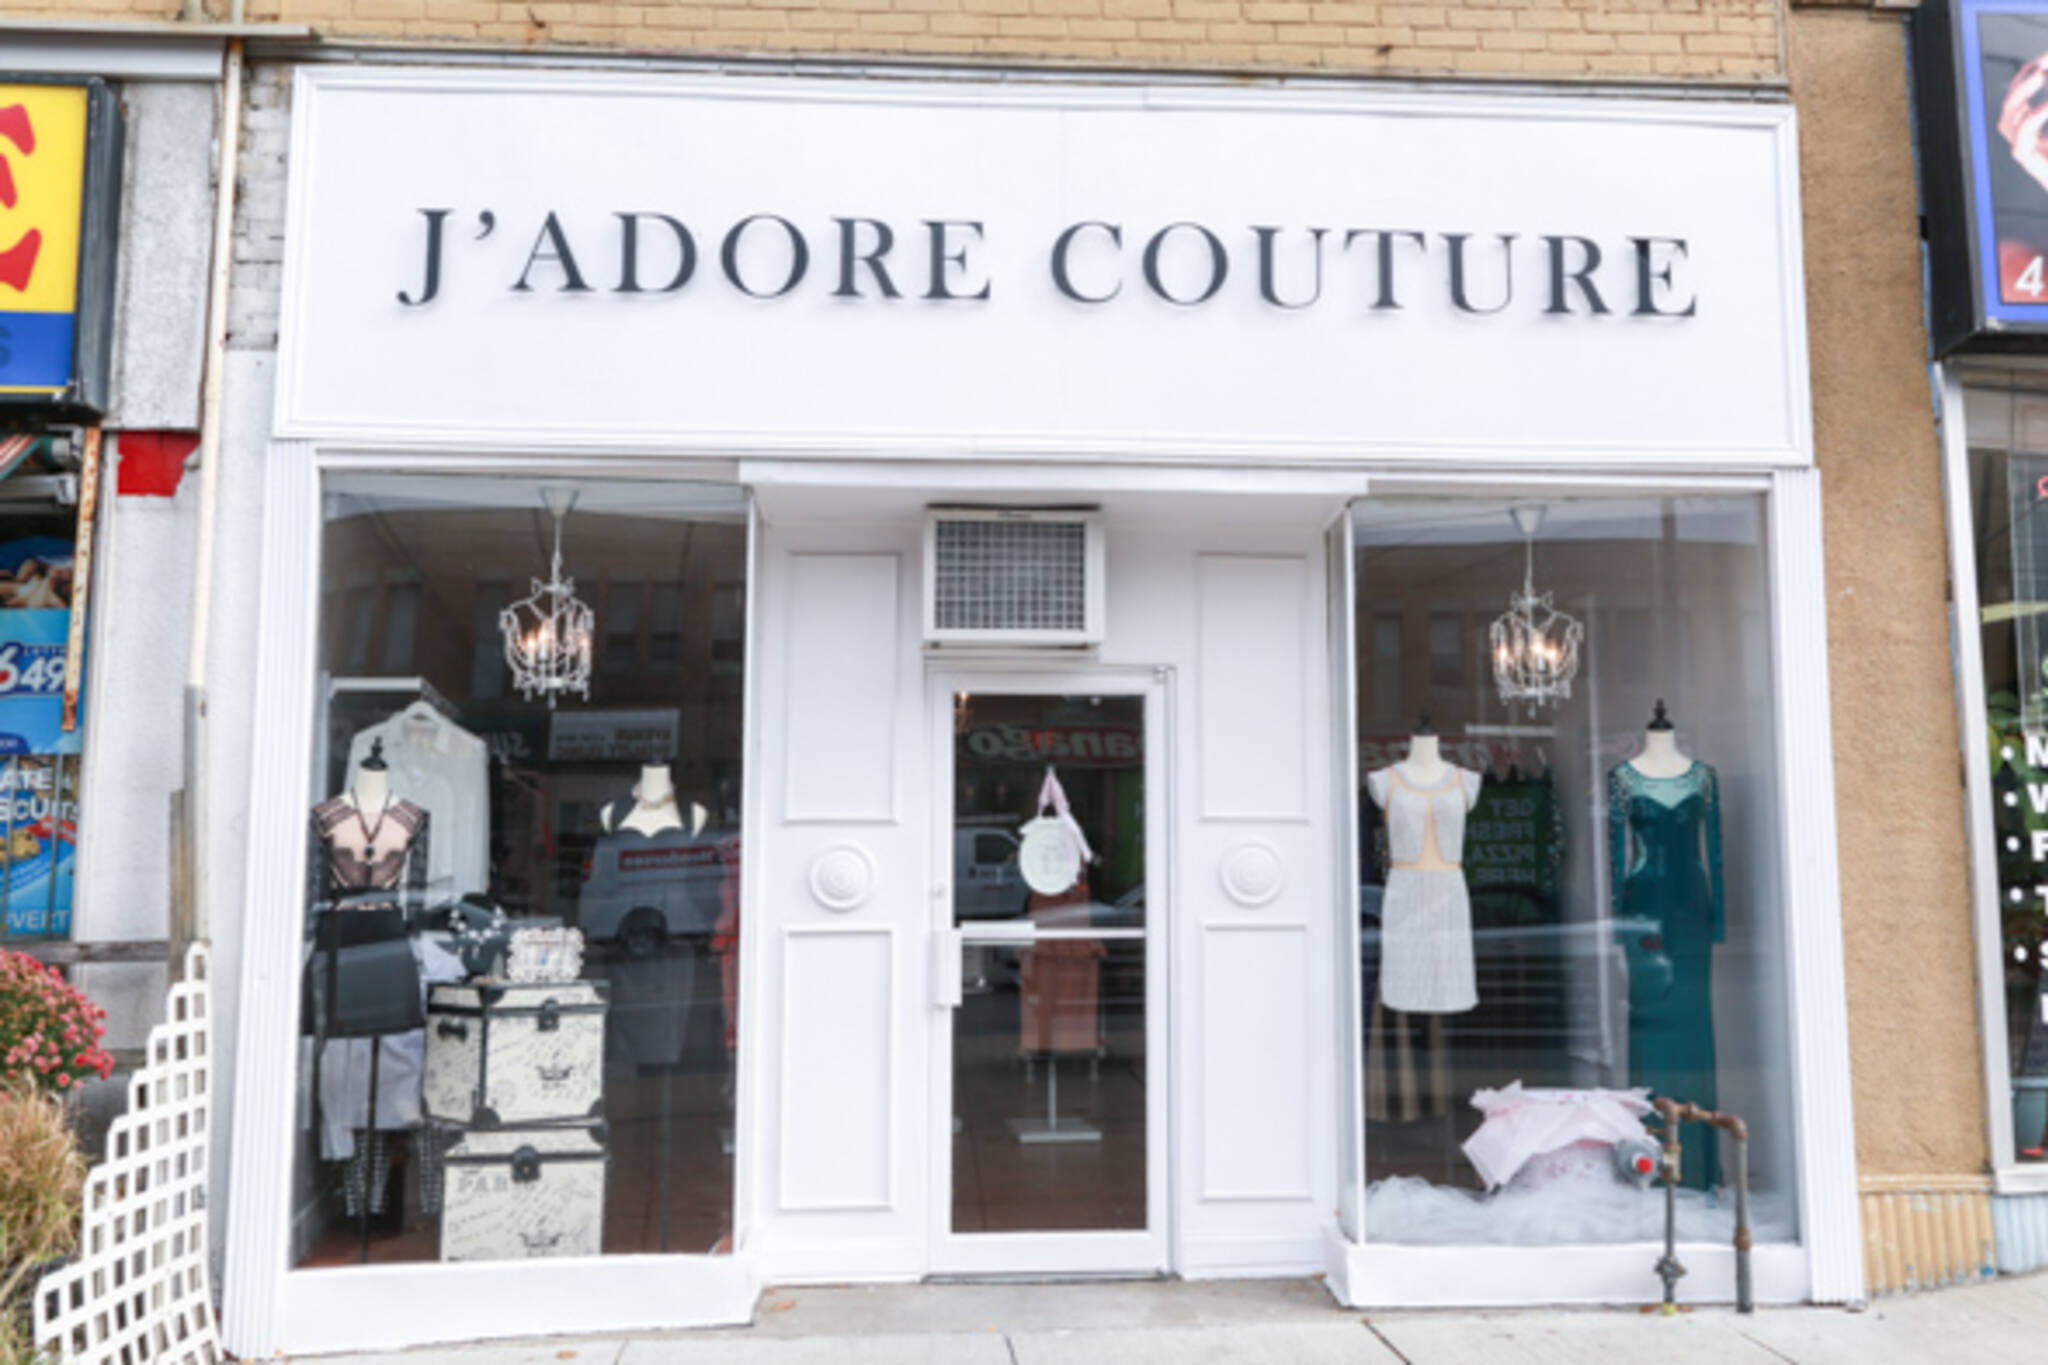 jadore couture